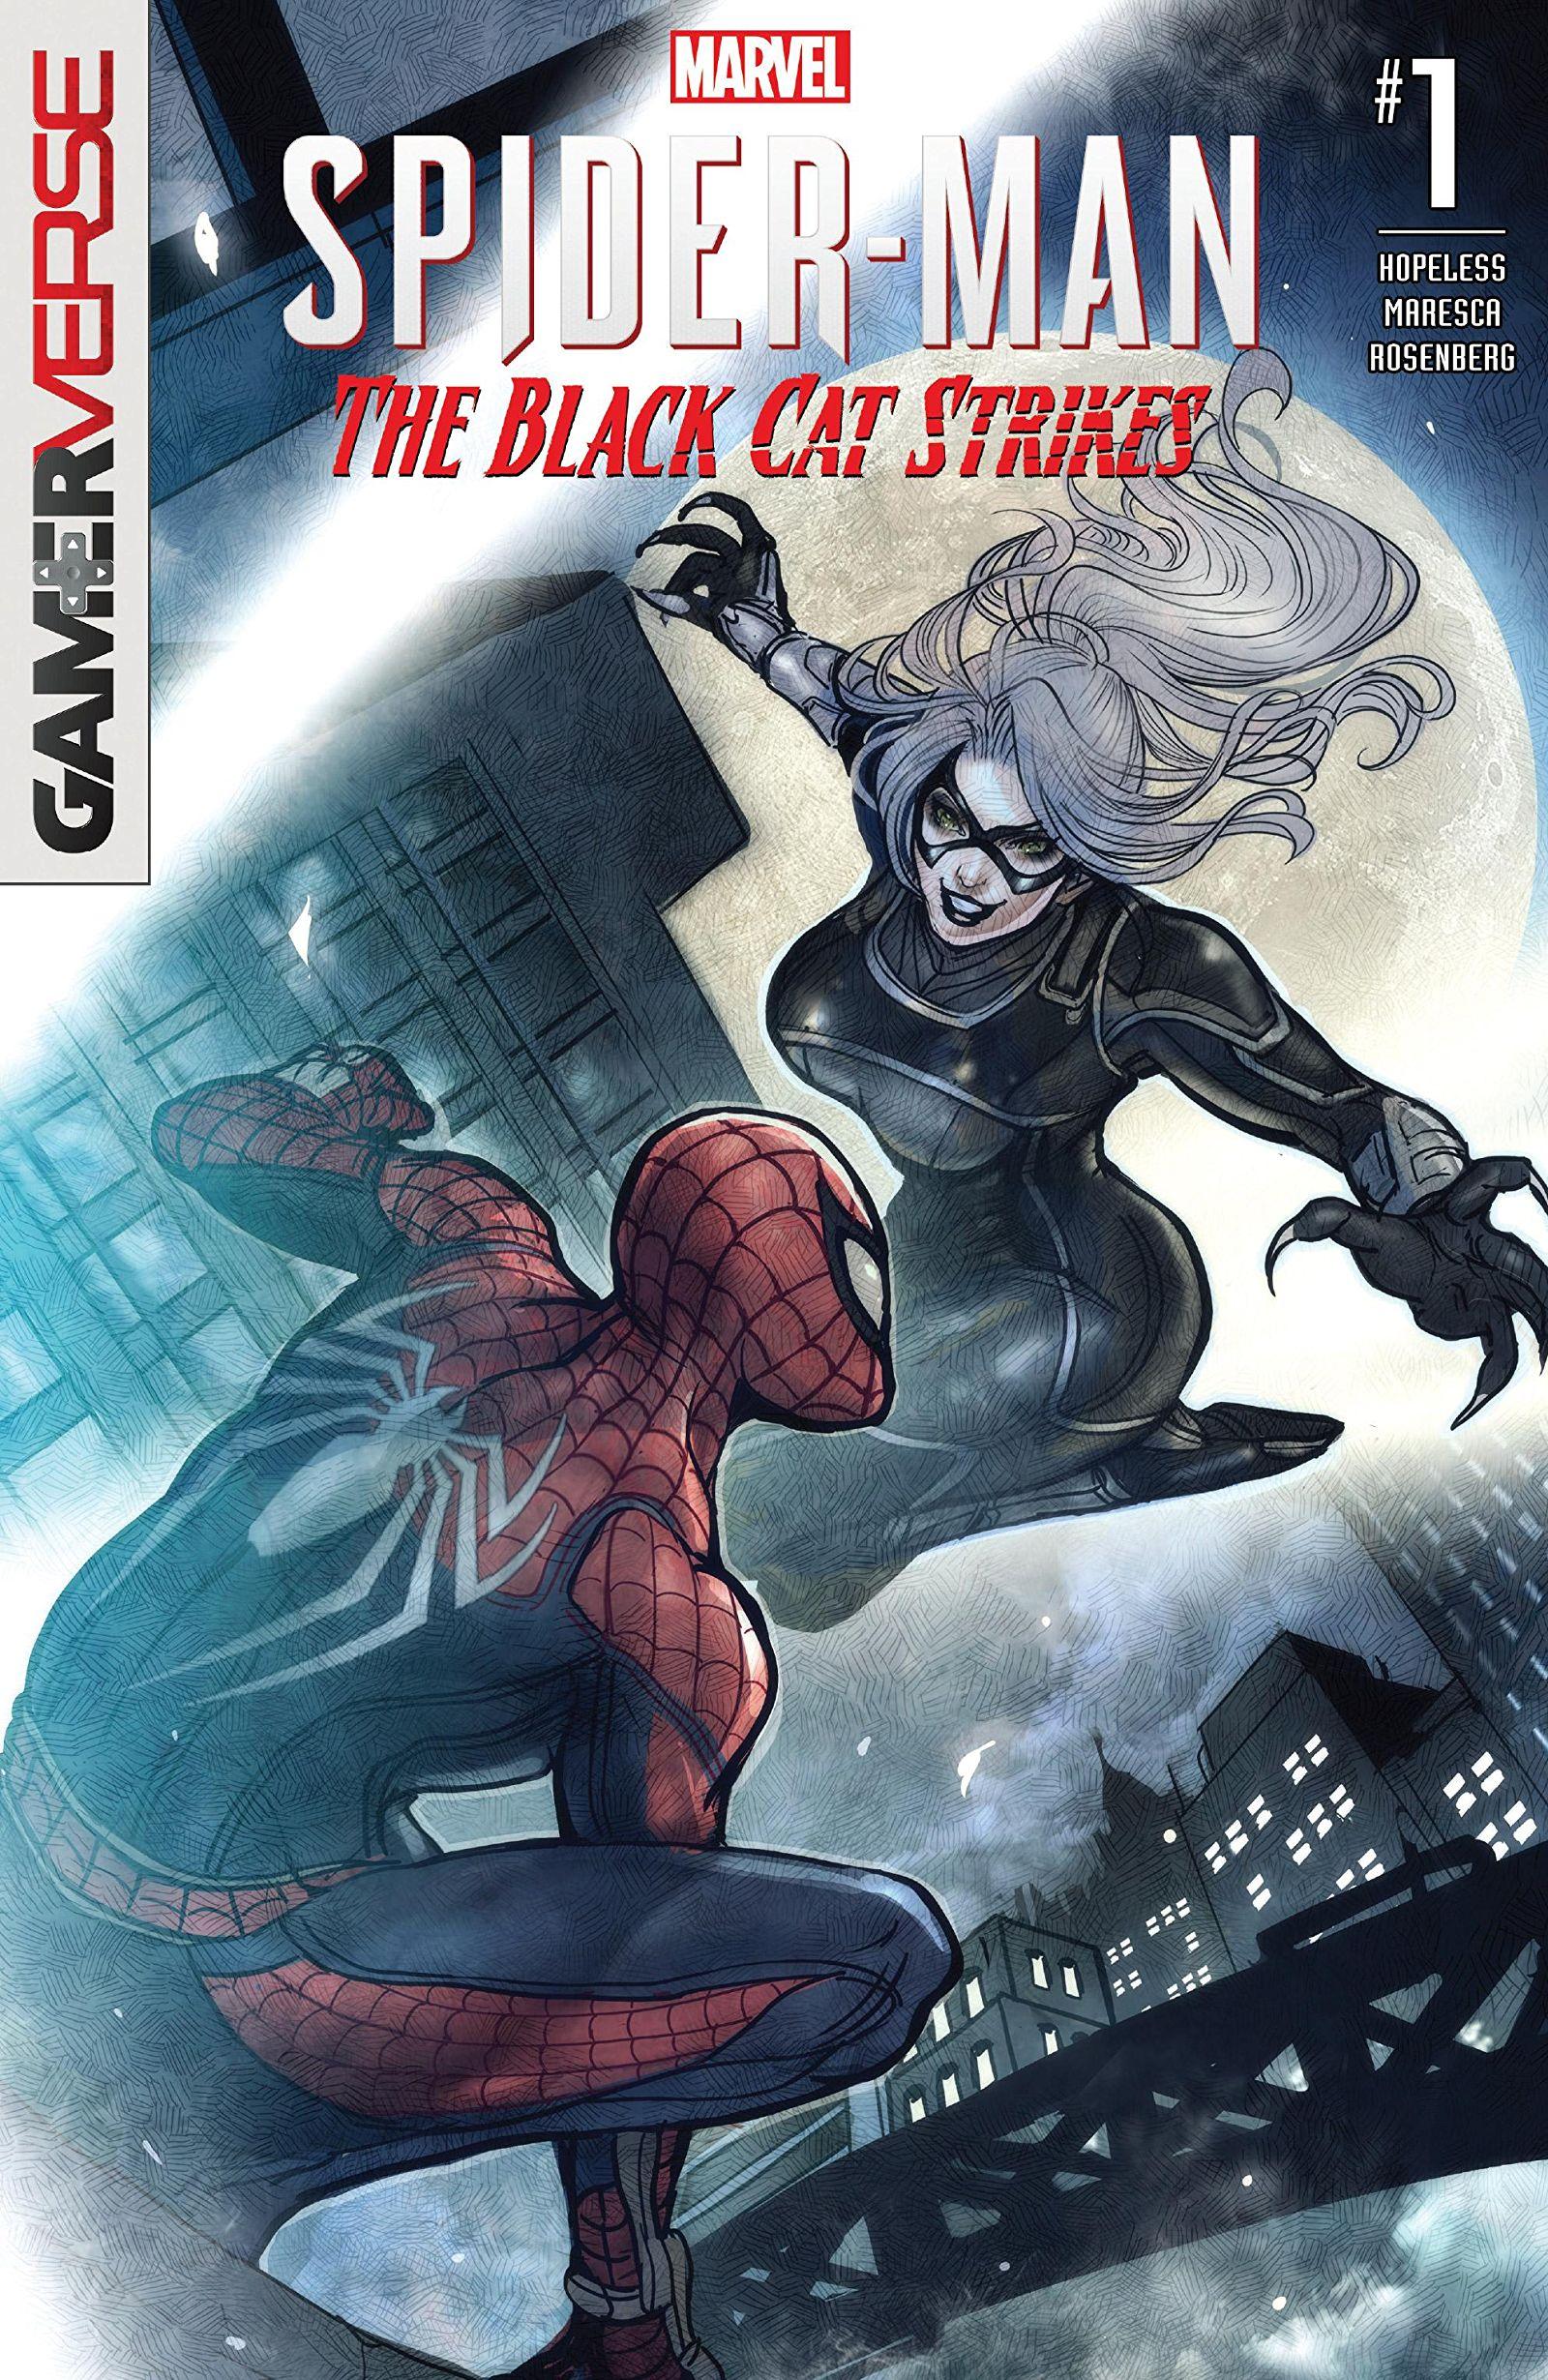 Marvel's Spider-Man: The Black Cat Strikes Vol. 1 #1